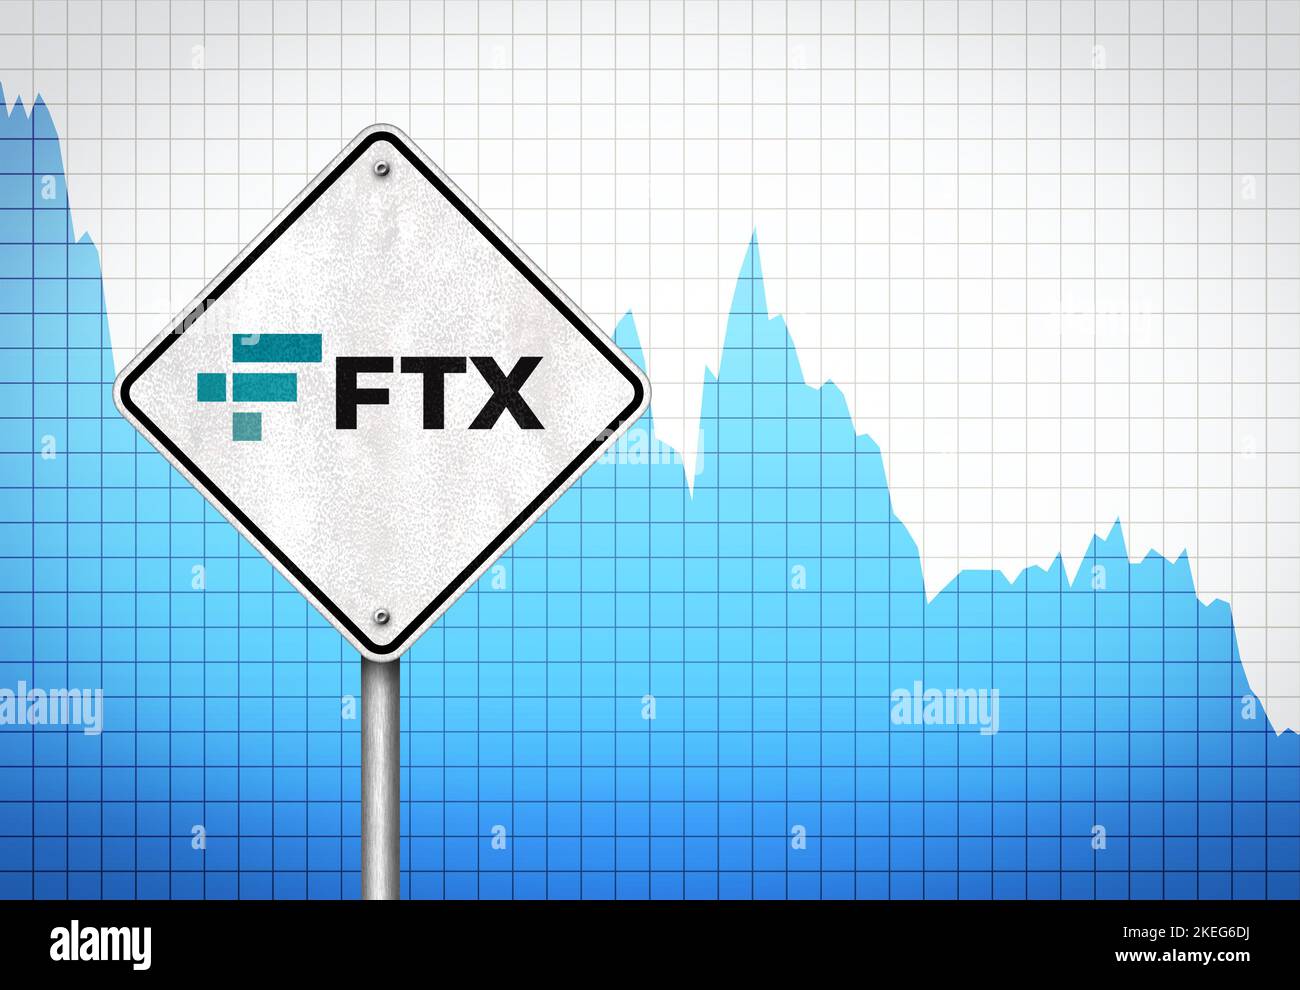 FTX cryptocurrency exchange Stock Photo